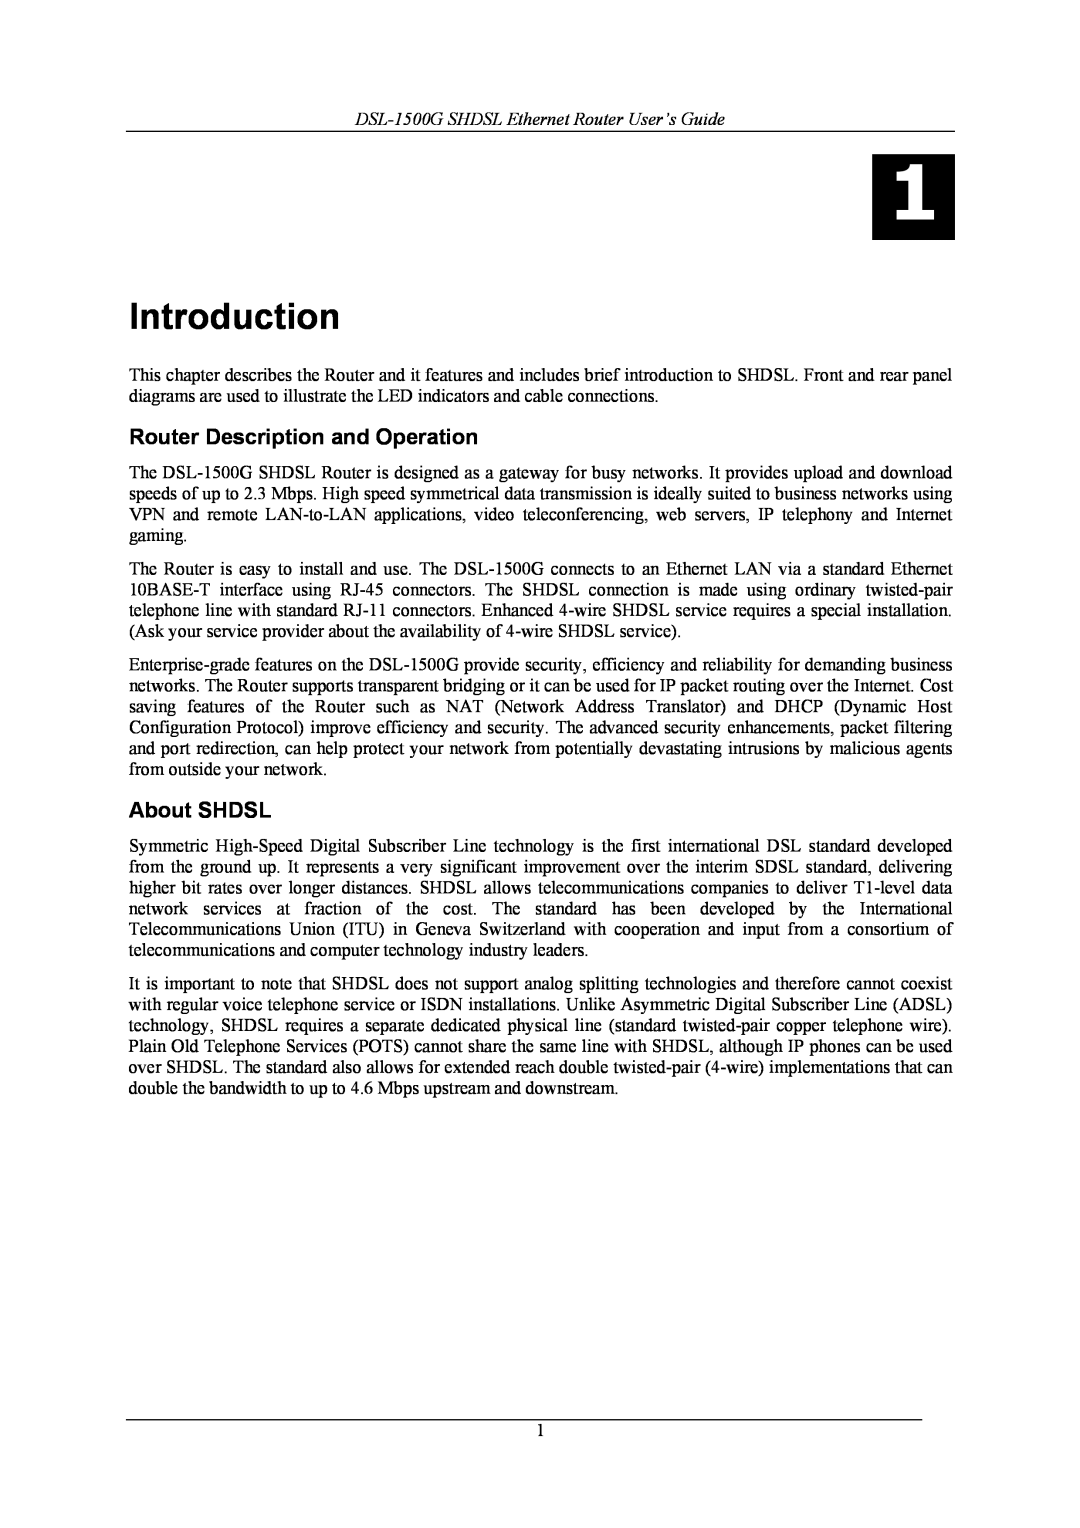 D-Link manual Introduction, Router Description and Operation, About SHDSL, DSL-1500G SHDSL Ethernet Router User’s Guide 